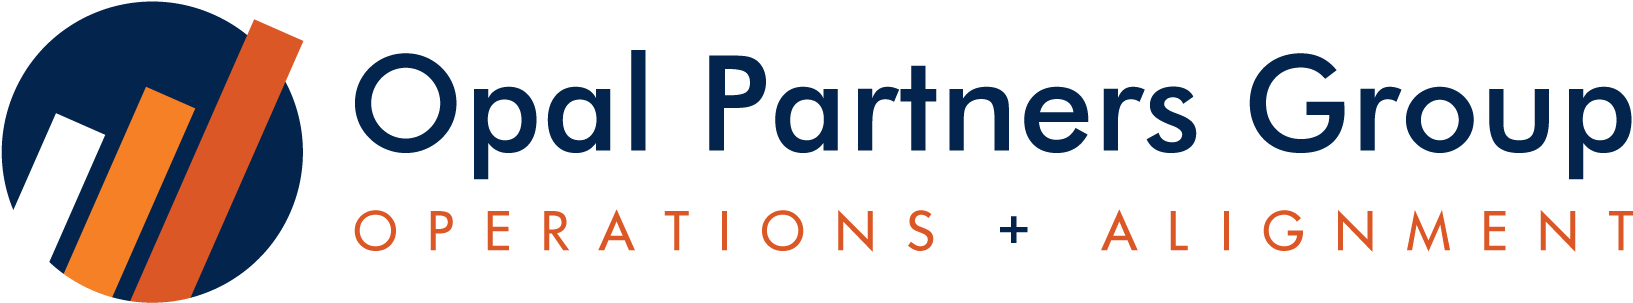 Opal Partners Group - Source1 Purchasing Logo (1715x405)